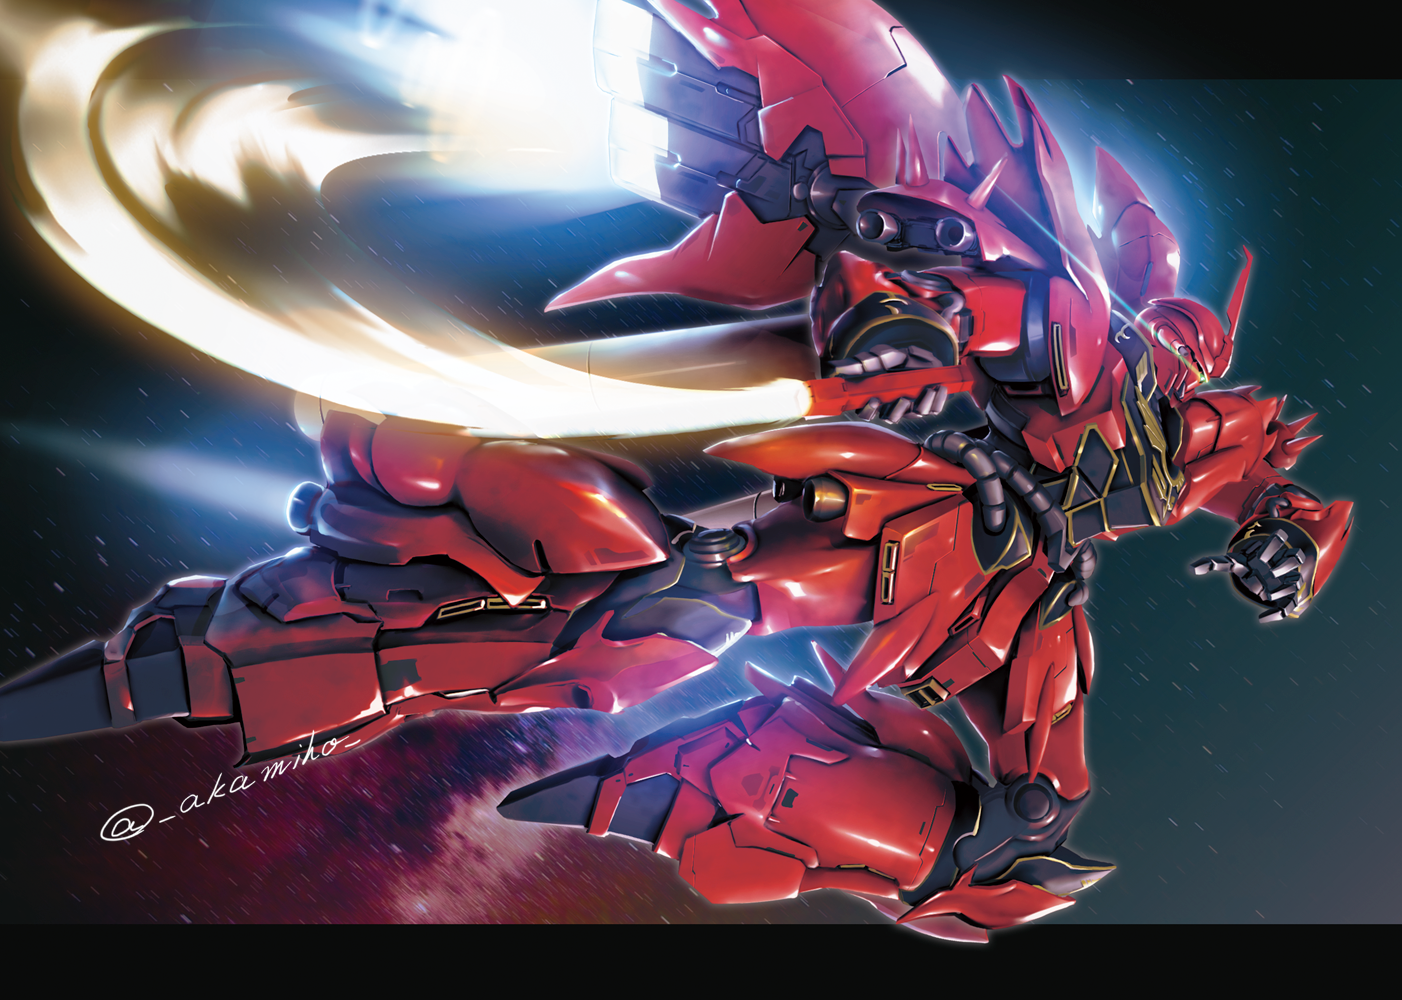 Anime 1402x1000 anime mechs Mobile Suit Gundam Unicorn Sinanju Mobile Suit Super Robot Taisen artwork digital art fan art